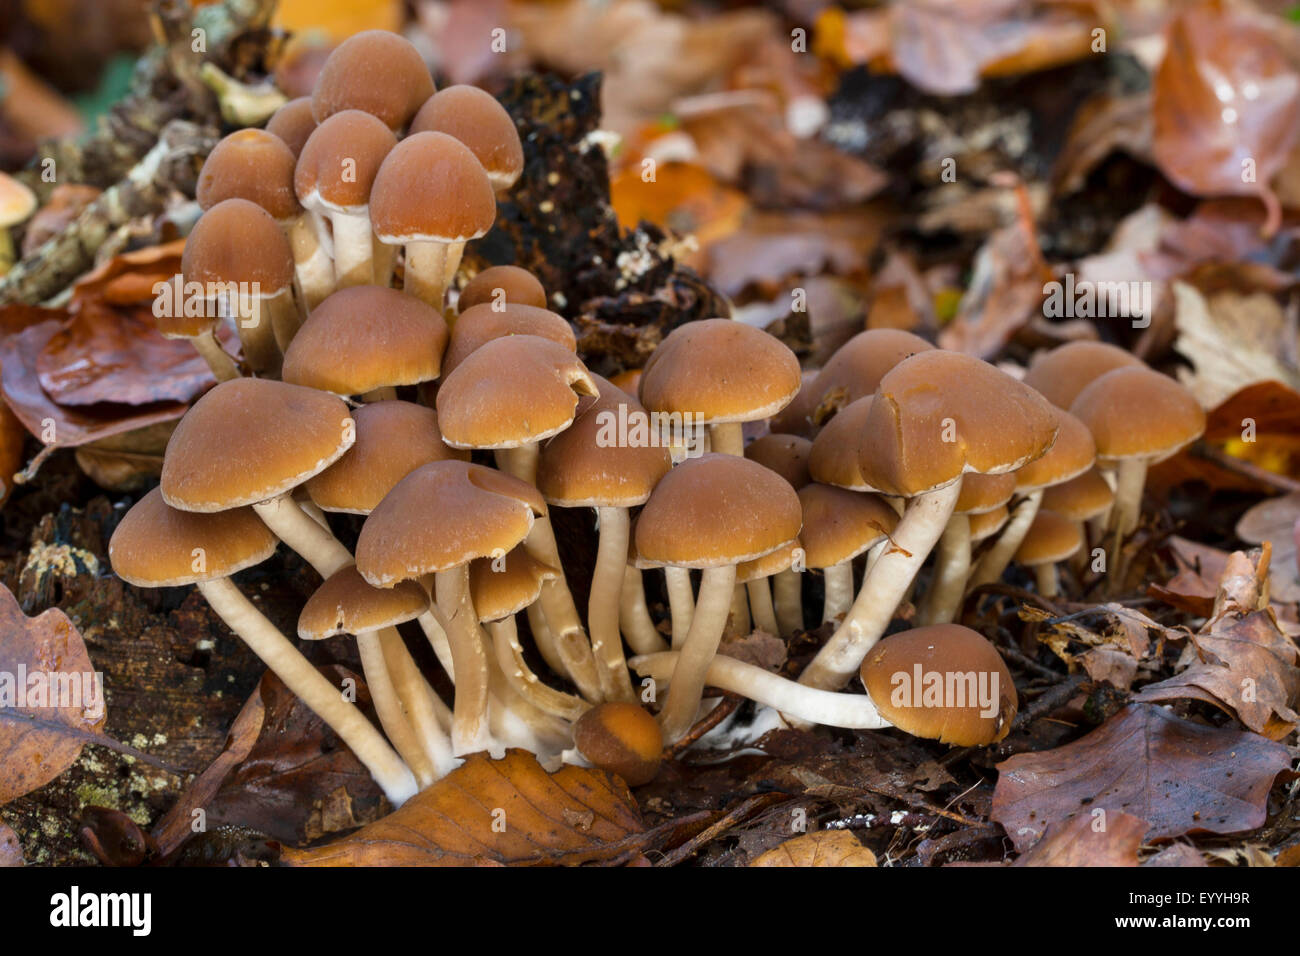 Common stump brittlestem (Psathyrella piluliformis, Psathyrelle hydrophila), on dead wood, Germany Stock Photo